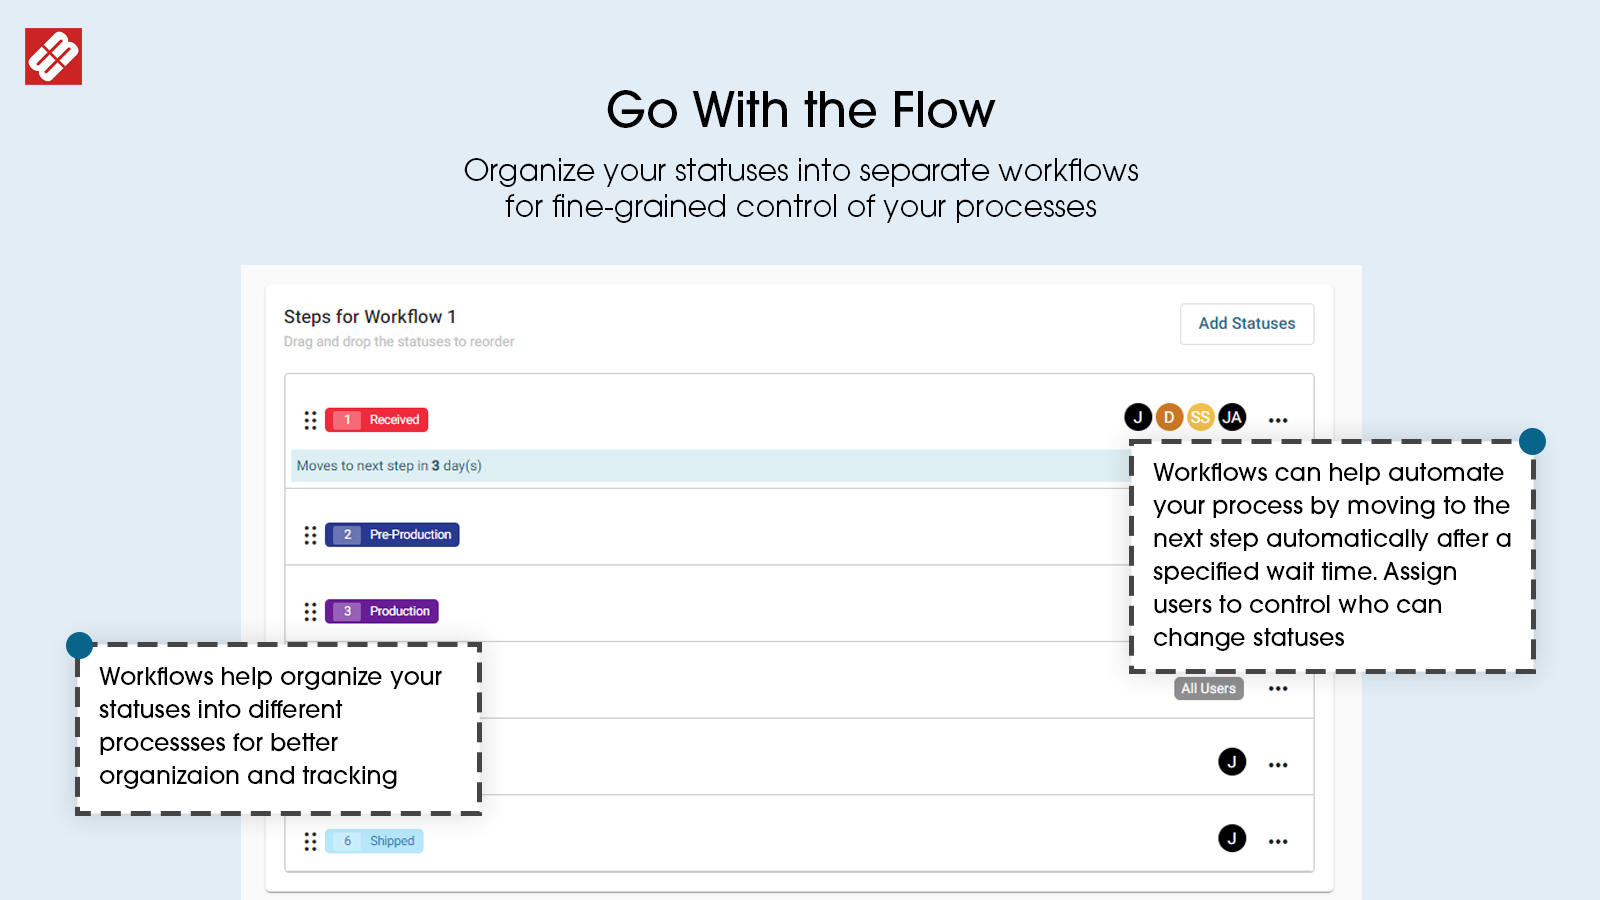 Organiser statusser i logiske automatiserede workflows